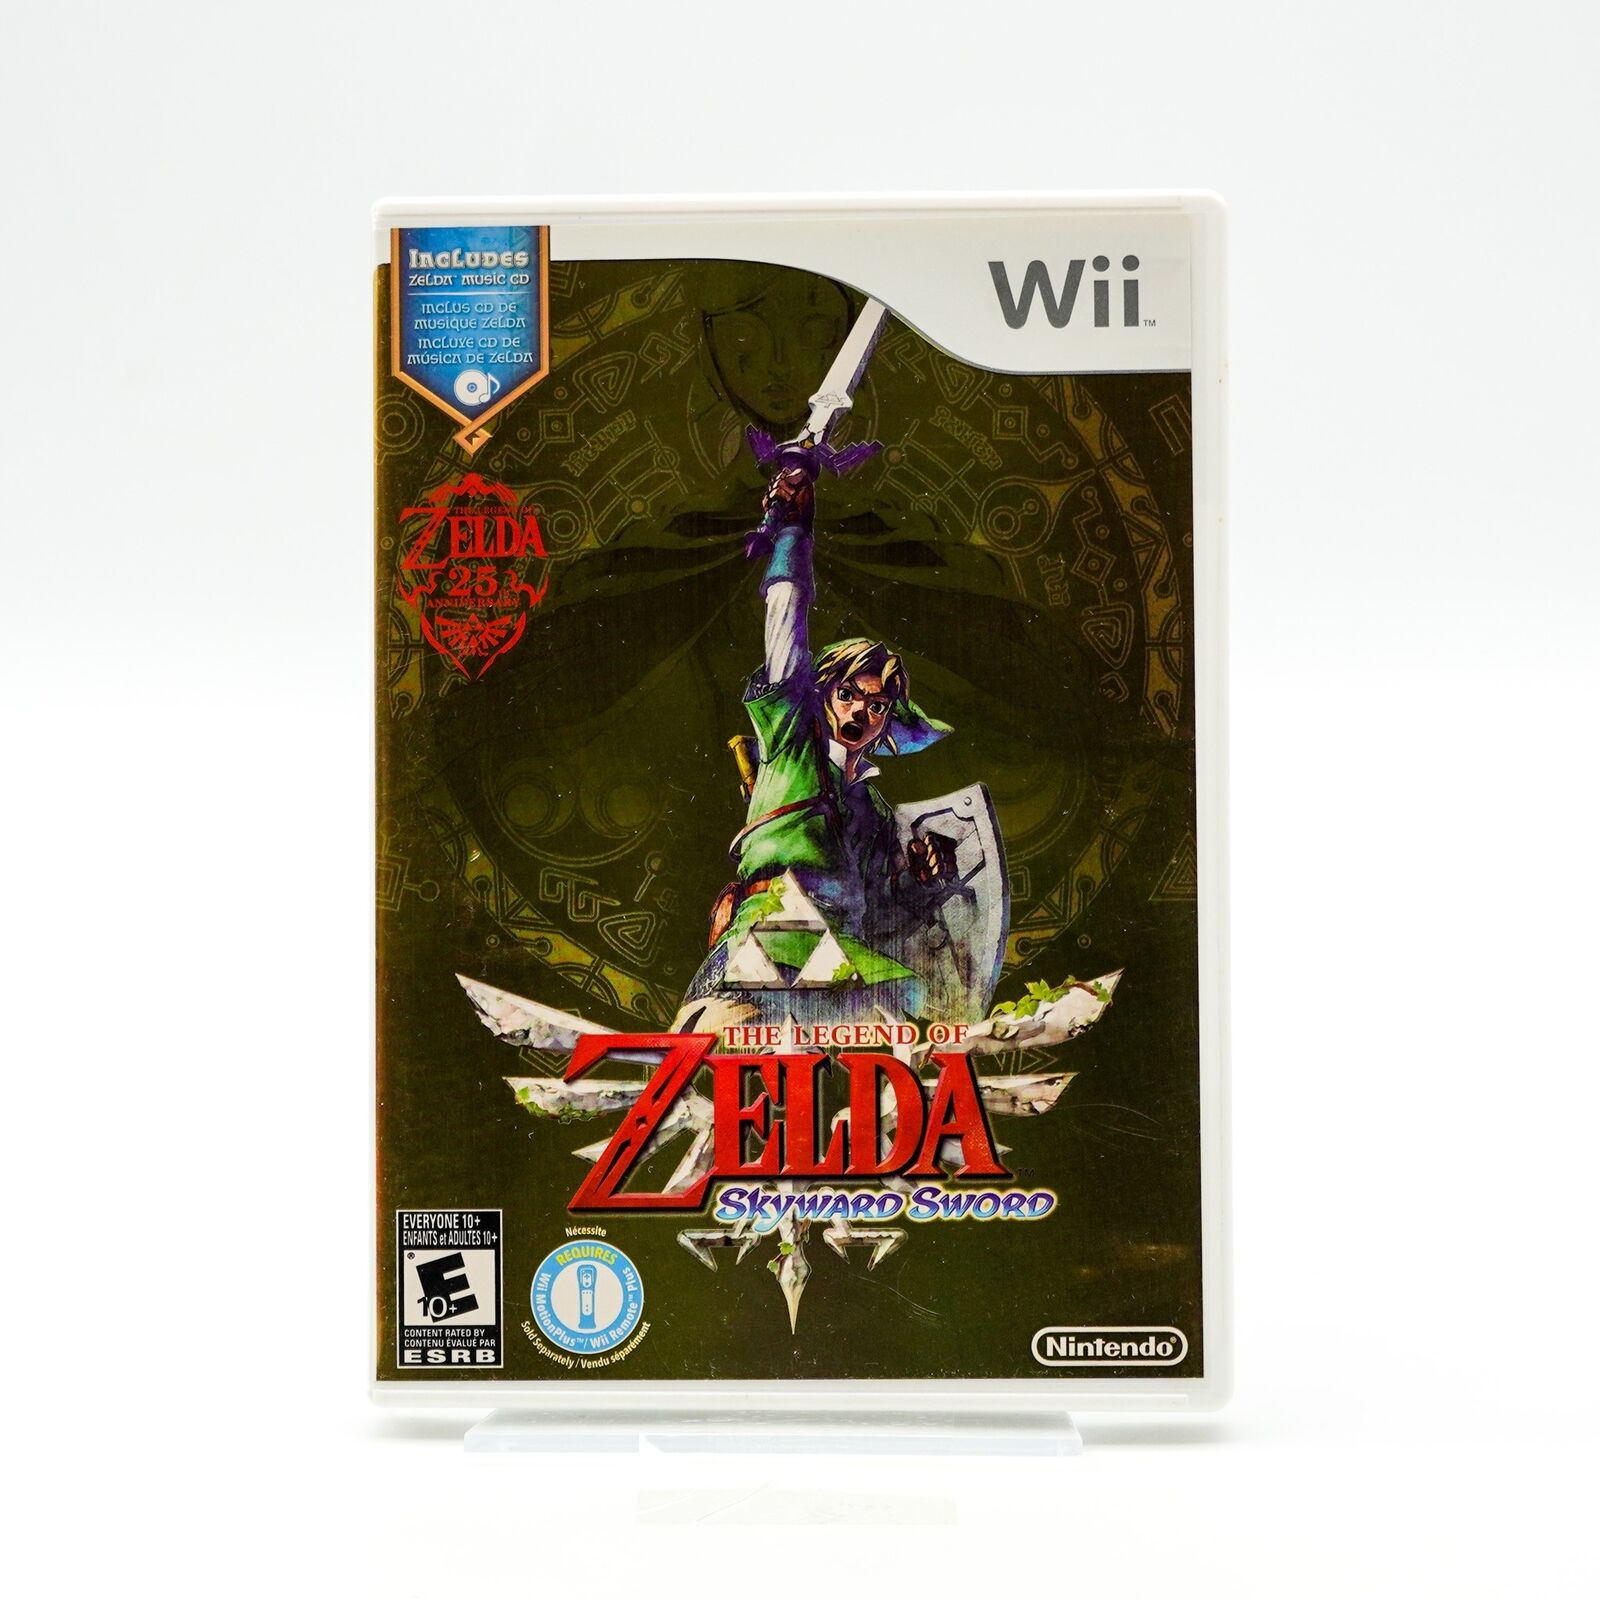 Nintendo Wii The Legend of Zelda Skyward Sword 25th Anniversary Game & Music CD